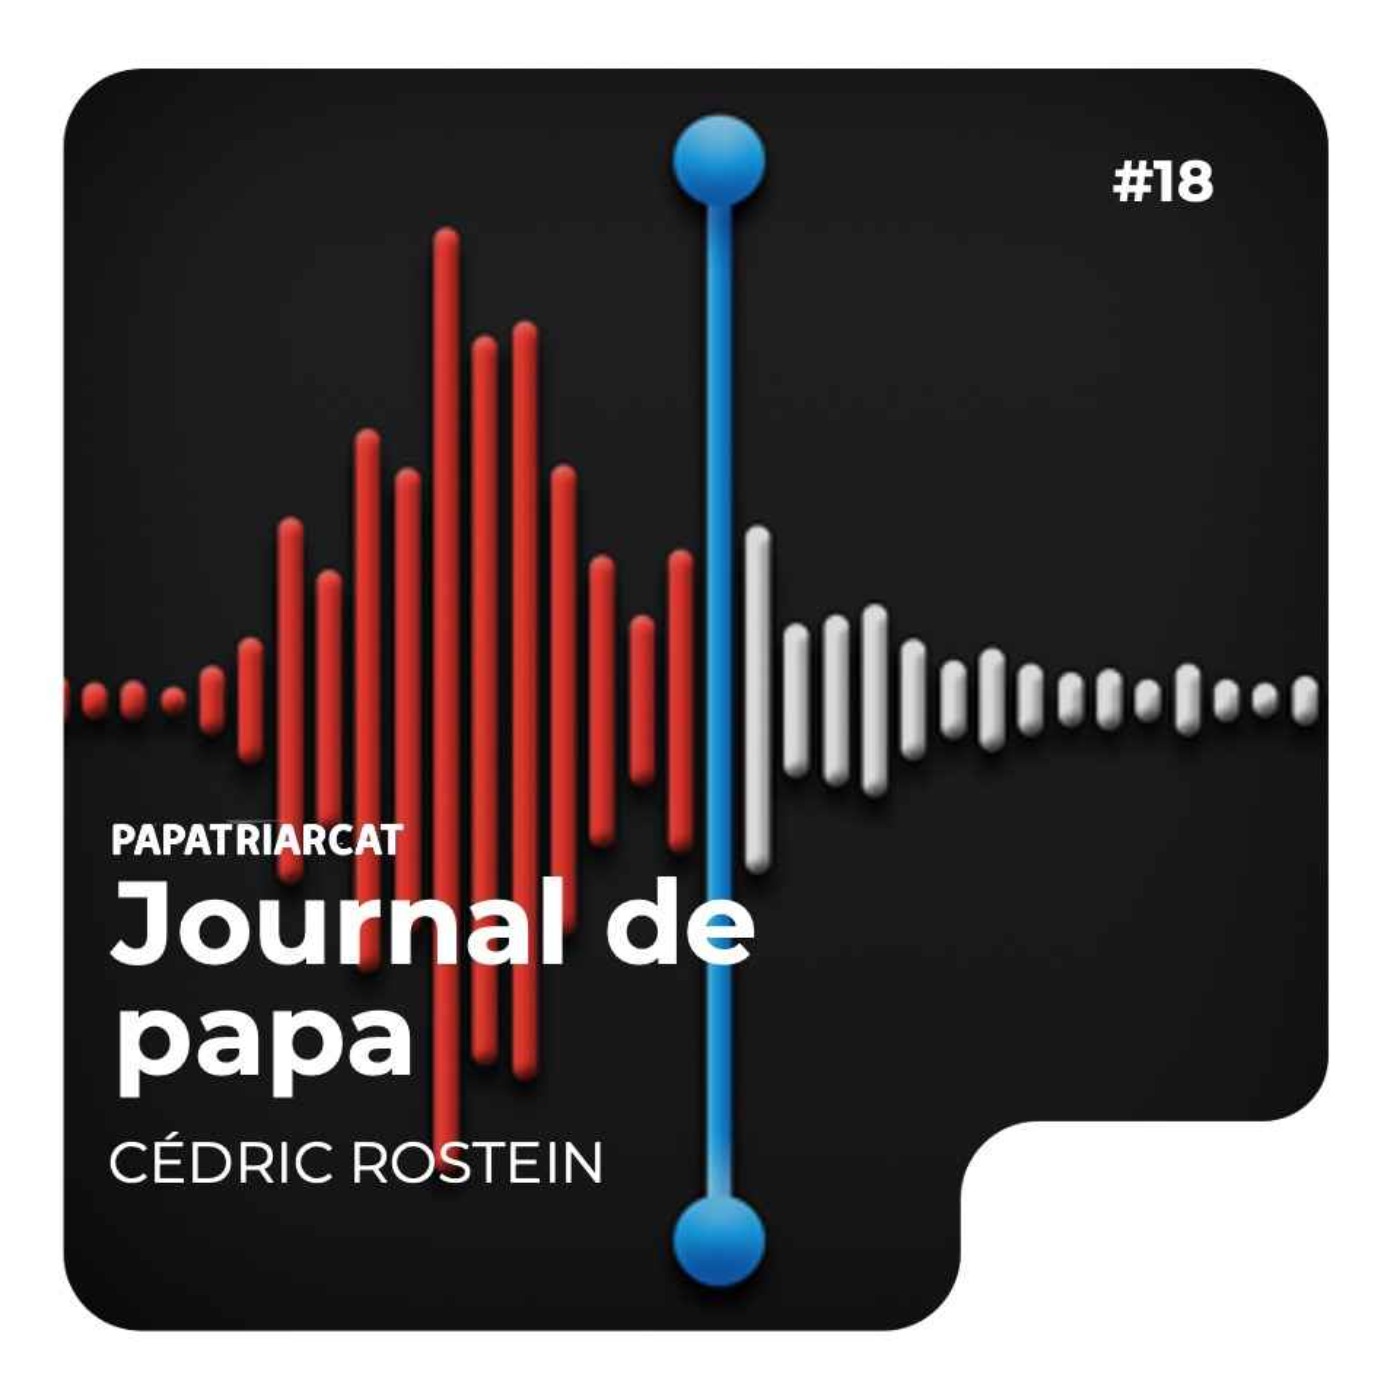 Journal de papa #18